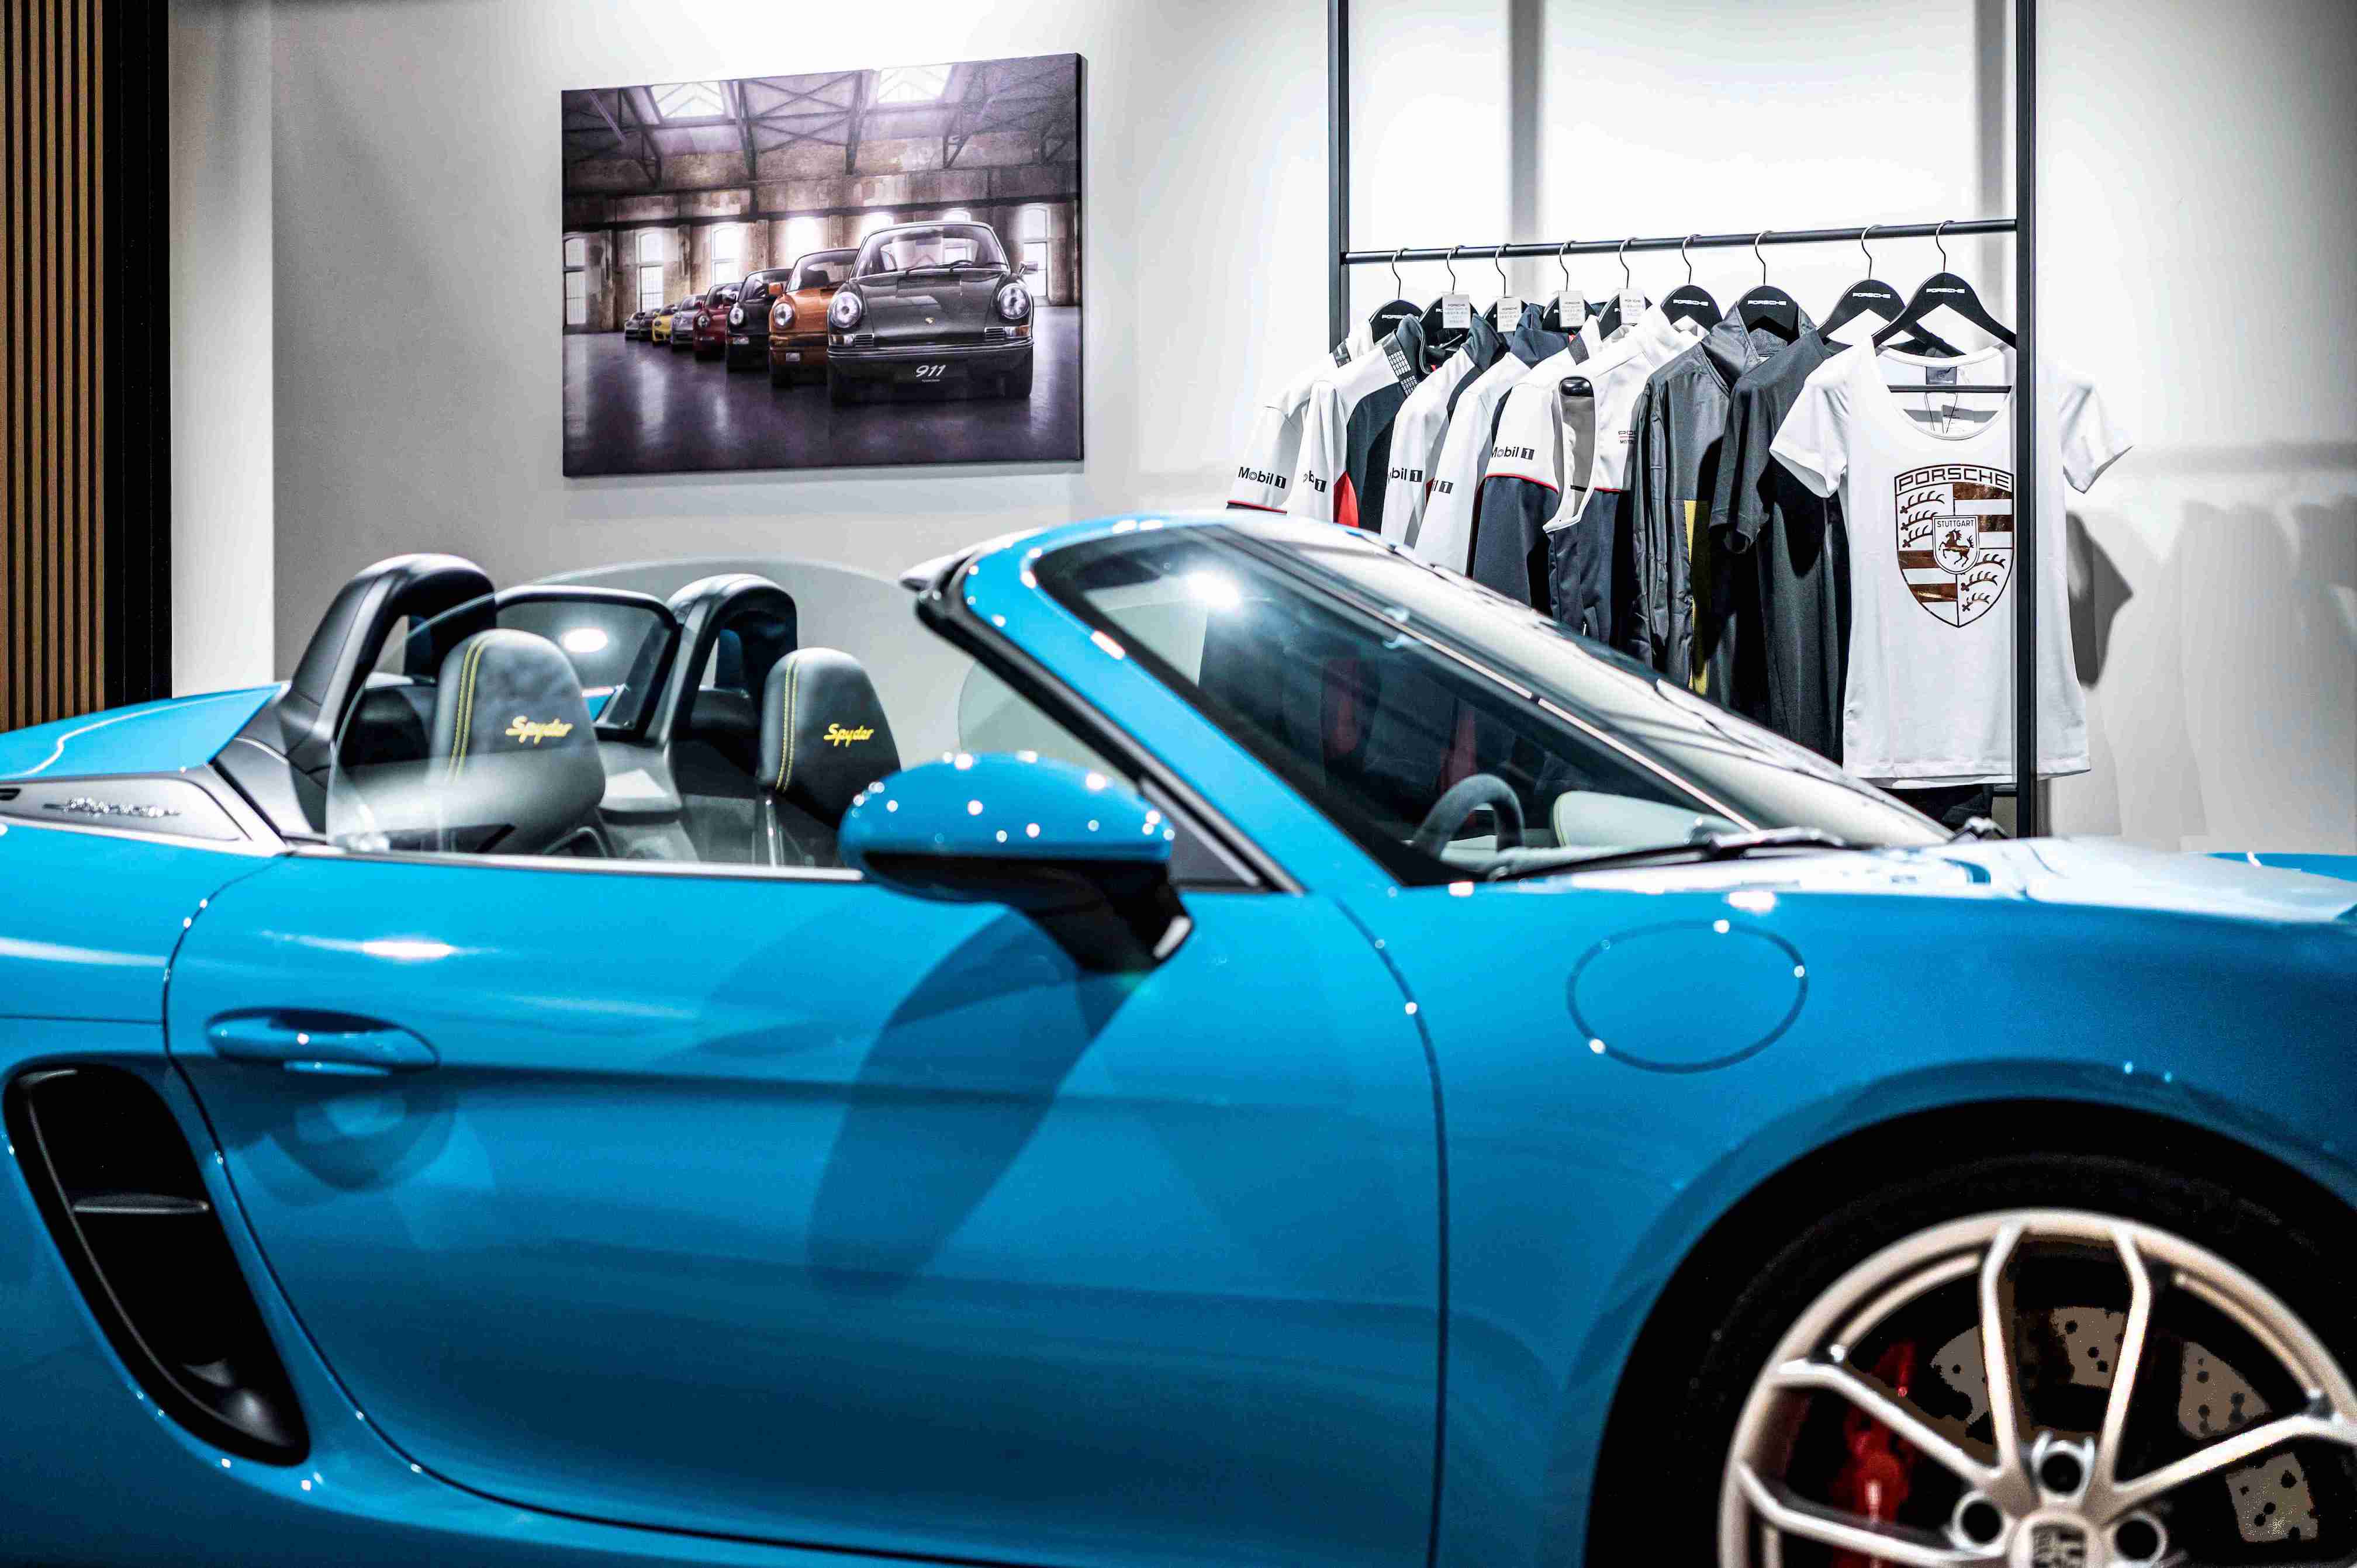 Porsche NOW 全新型態概念店提供品牌精品展售，導入 Porsche 時尚風格的商務配件與設計商品等。